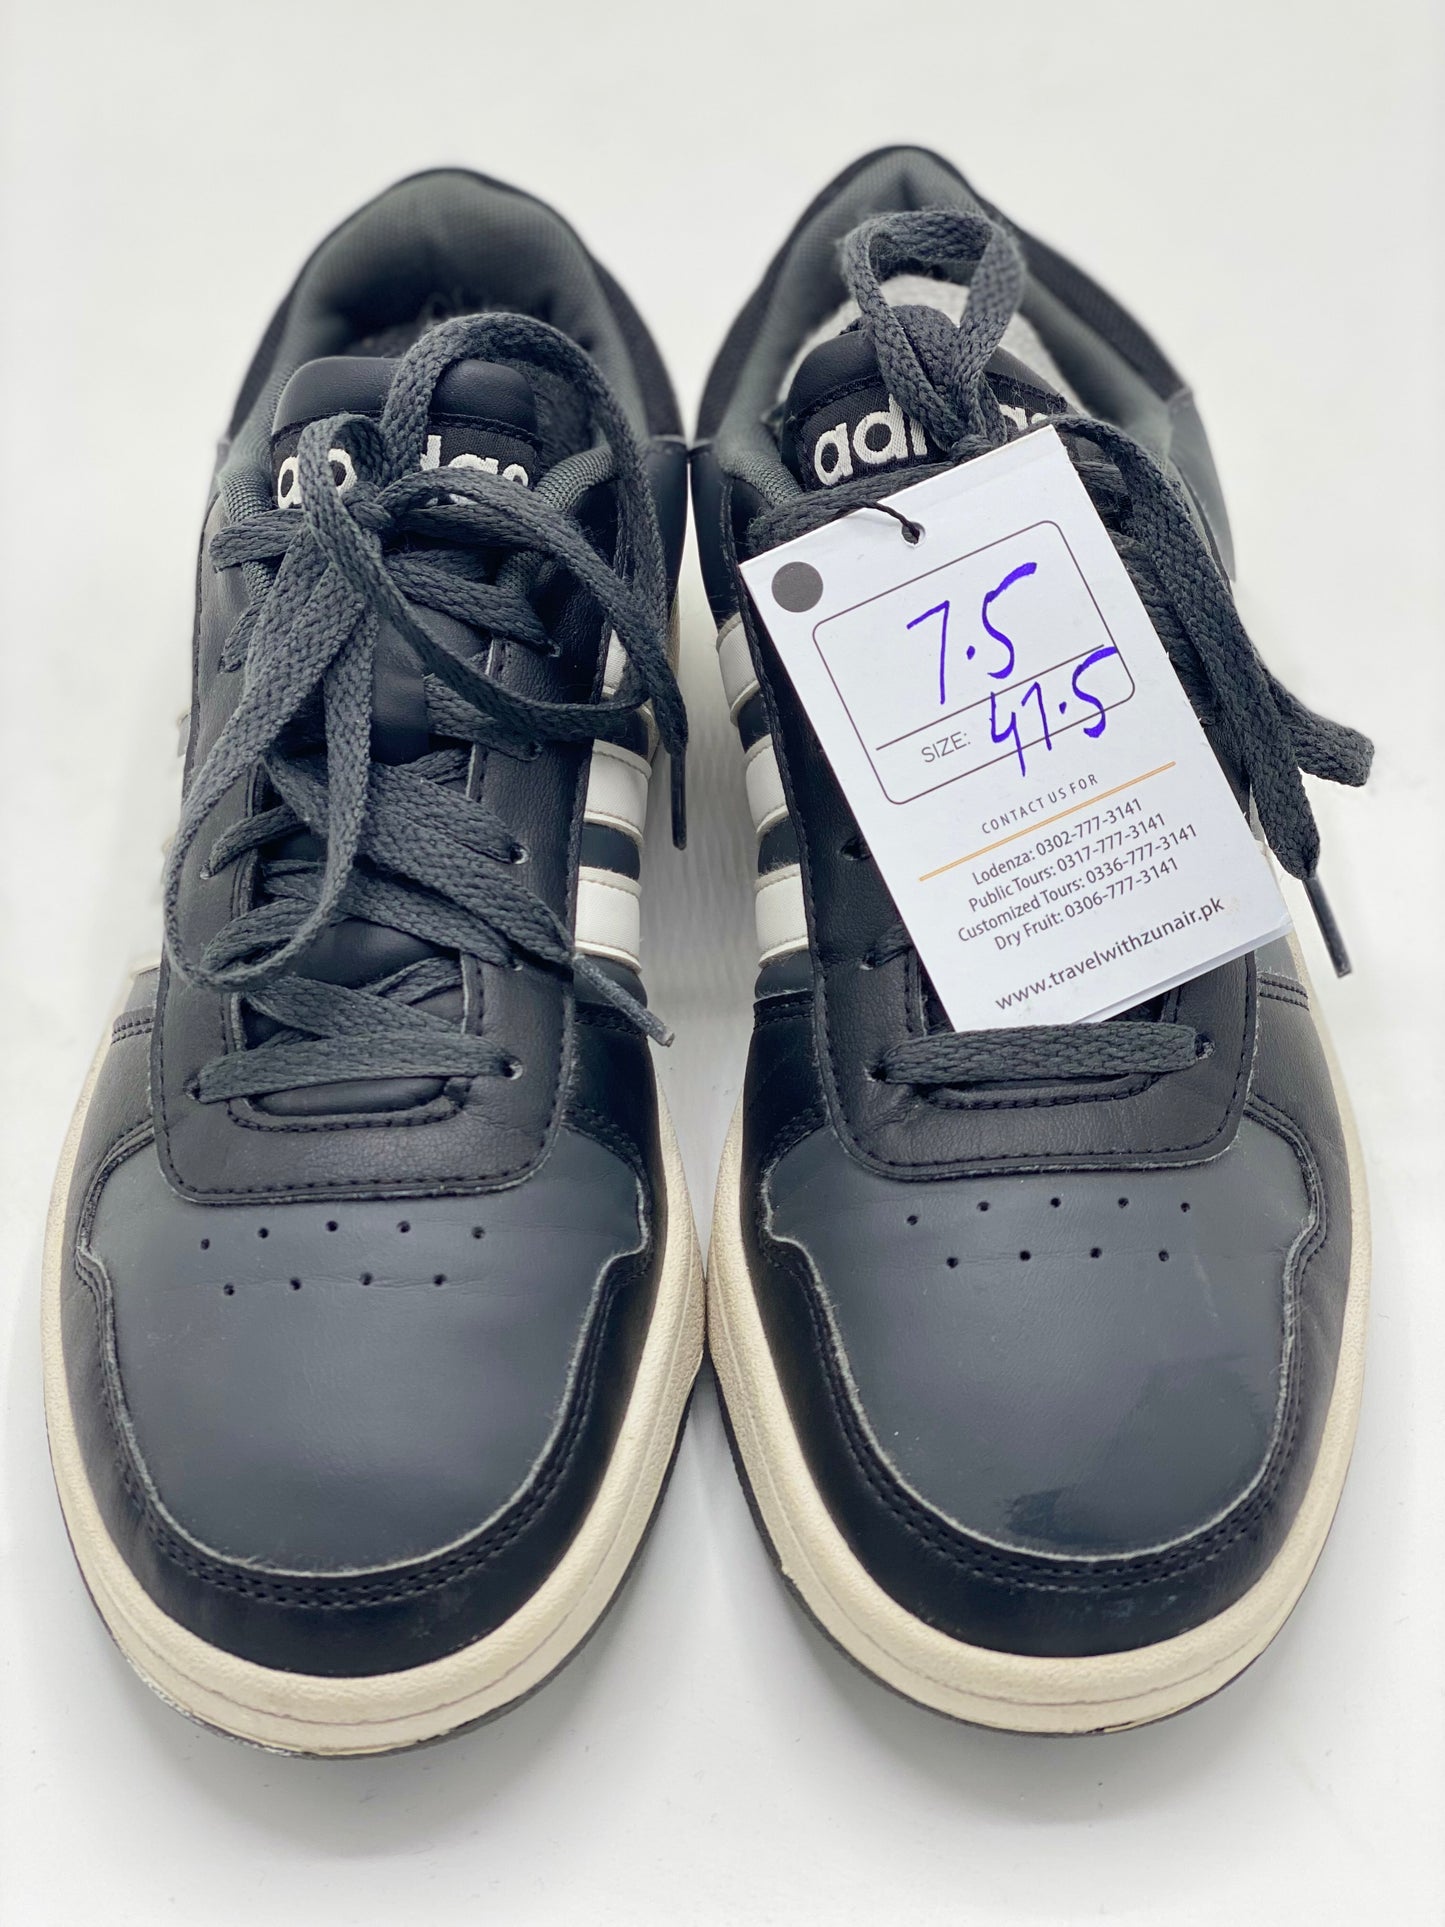 Adidas Mens Hoops 2.0 B44699 Black Casual Shoes Sneakers